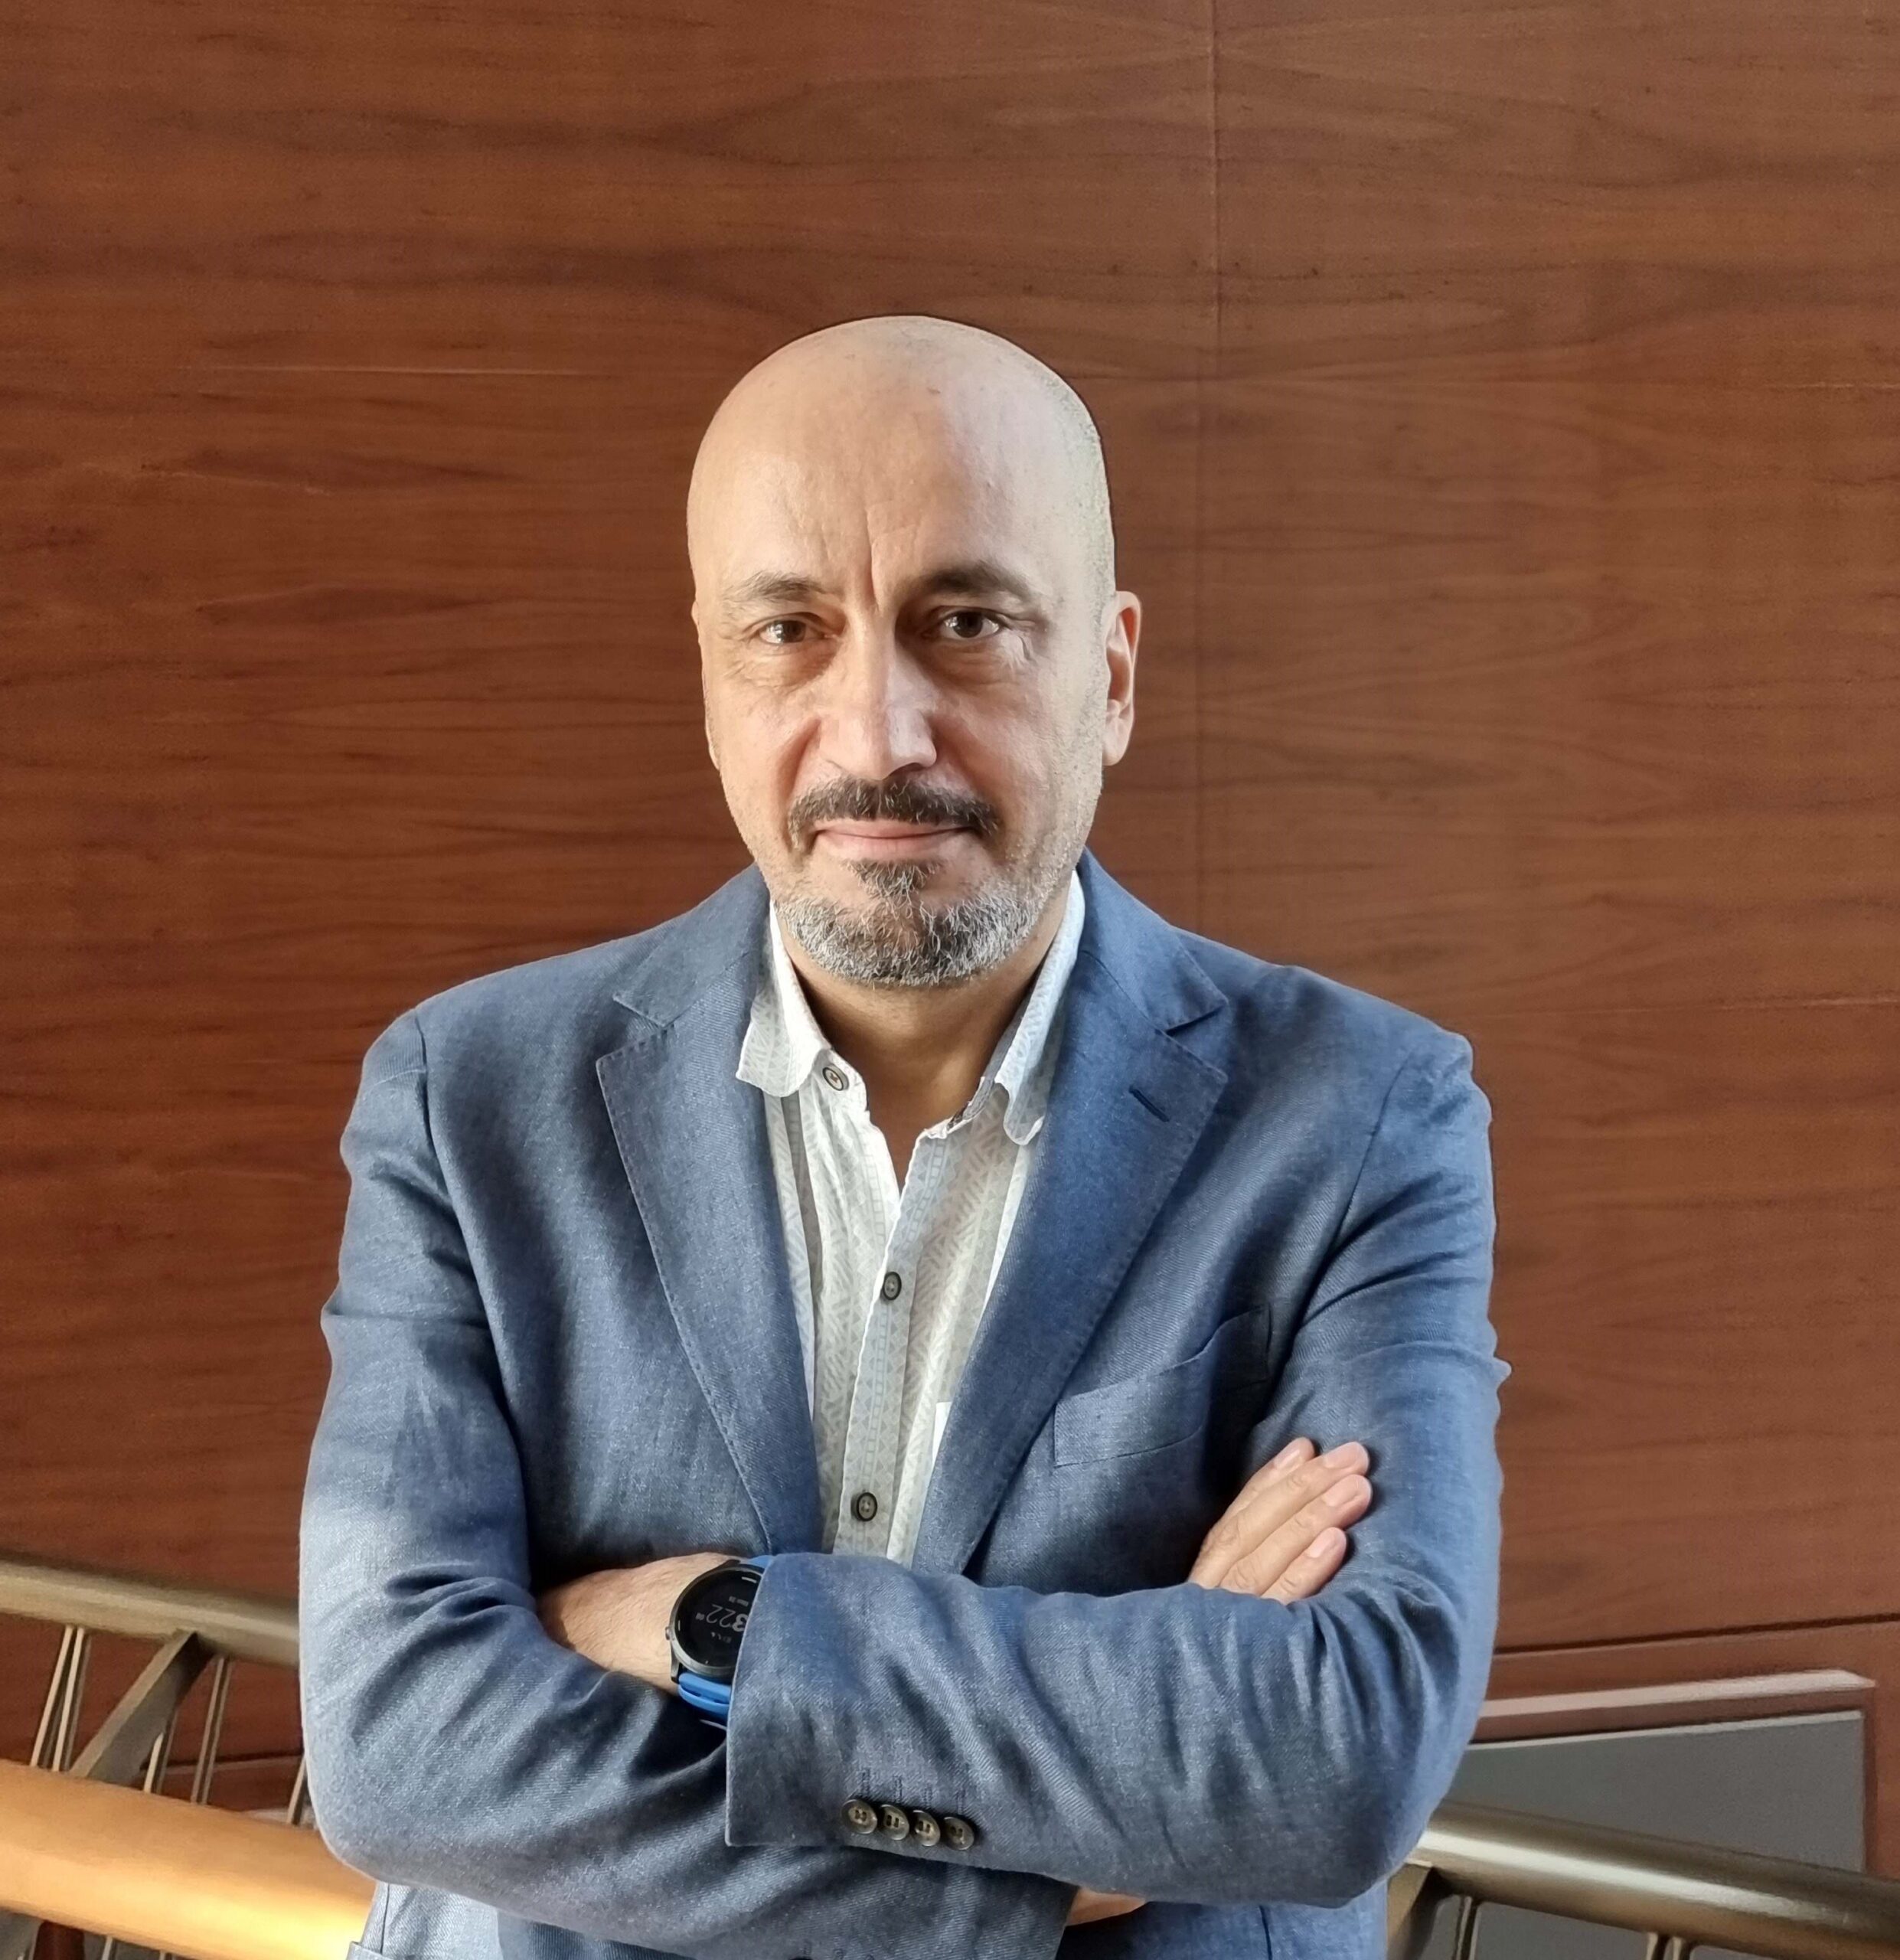 ImpactGulf founder and CEO Yassin Nasri